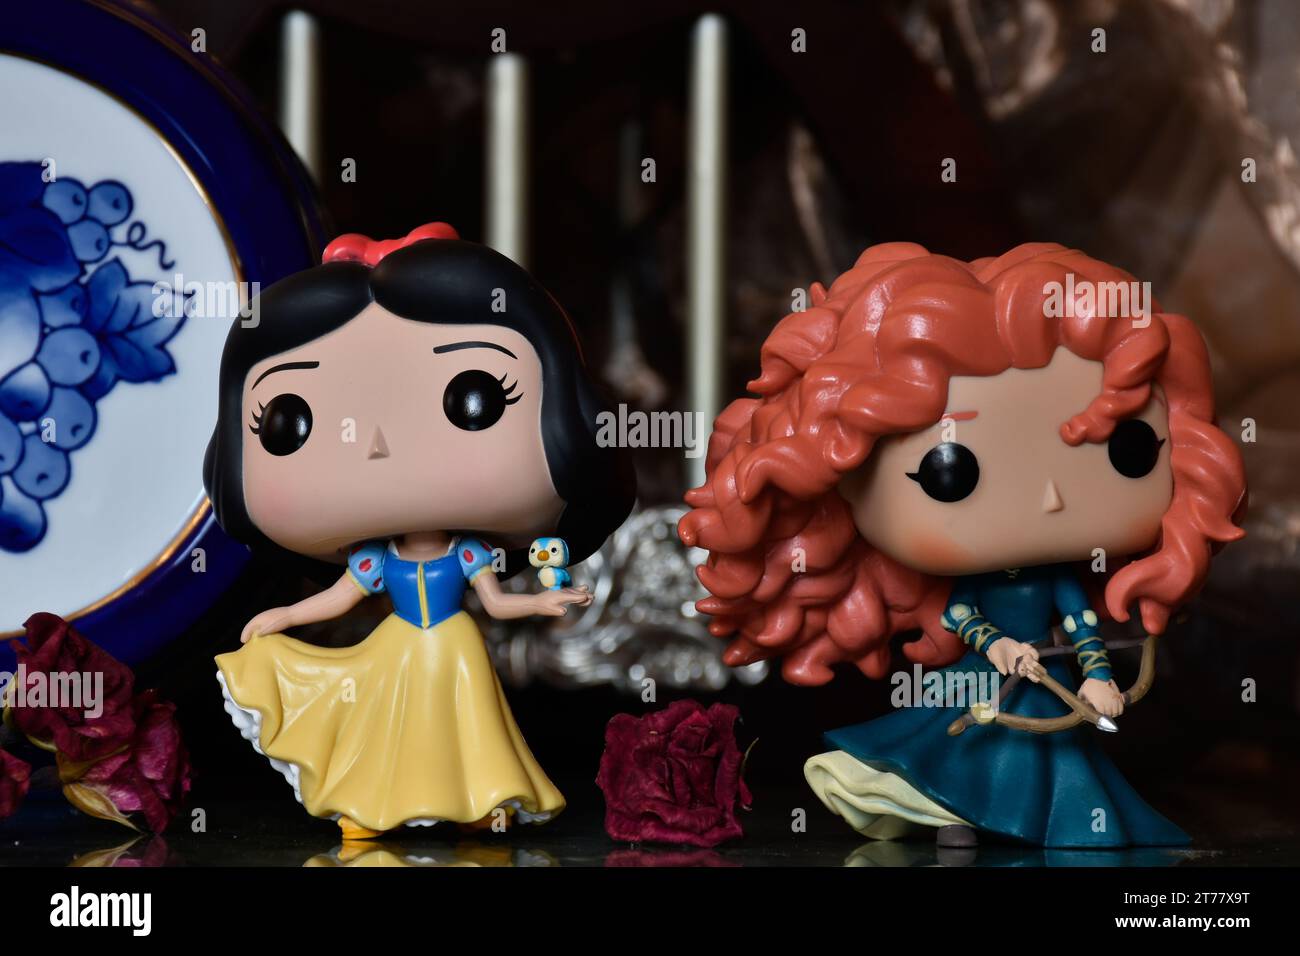 Funko Pop action figures of Disney princesses Snow White and Merida (Brave). Medieval castle, fabulous kingdom, red roses, porcelain blue keg. Stock Photo